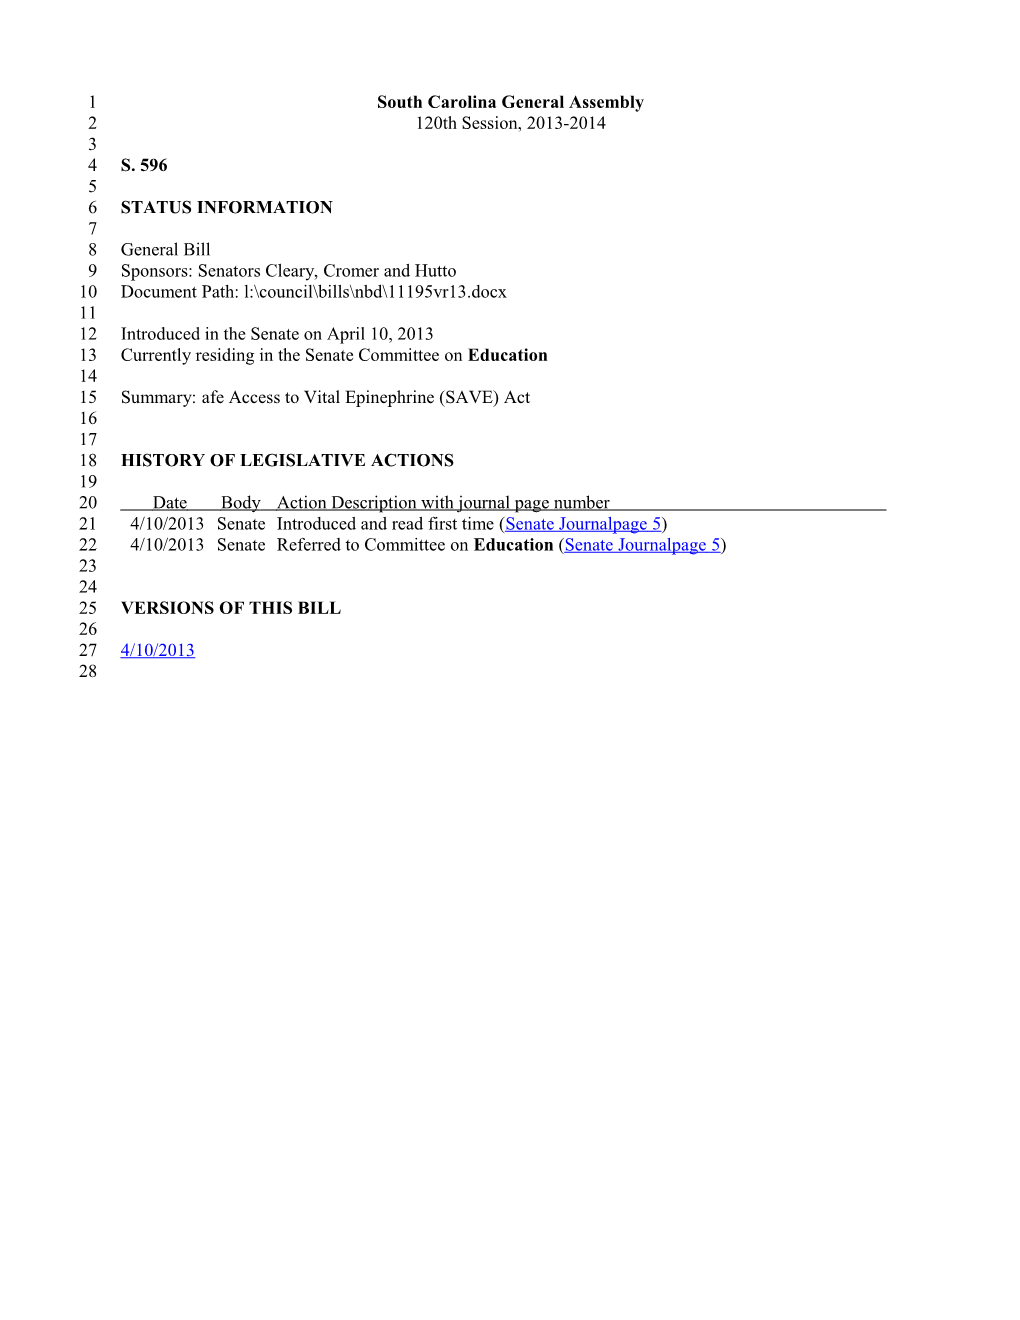 2013-2014 Bill 596: Afe Access to Vital Epinephrine (SAVE) Act - South Carolina Legislature